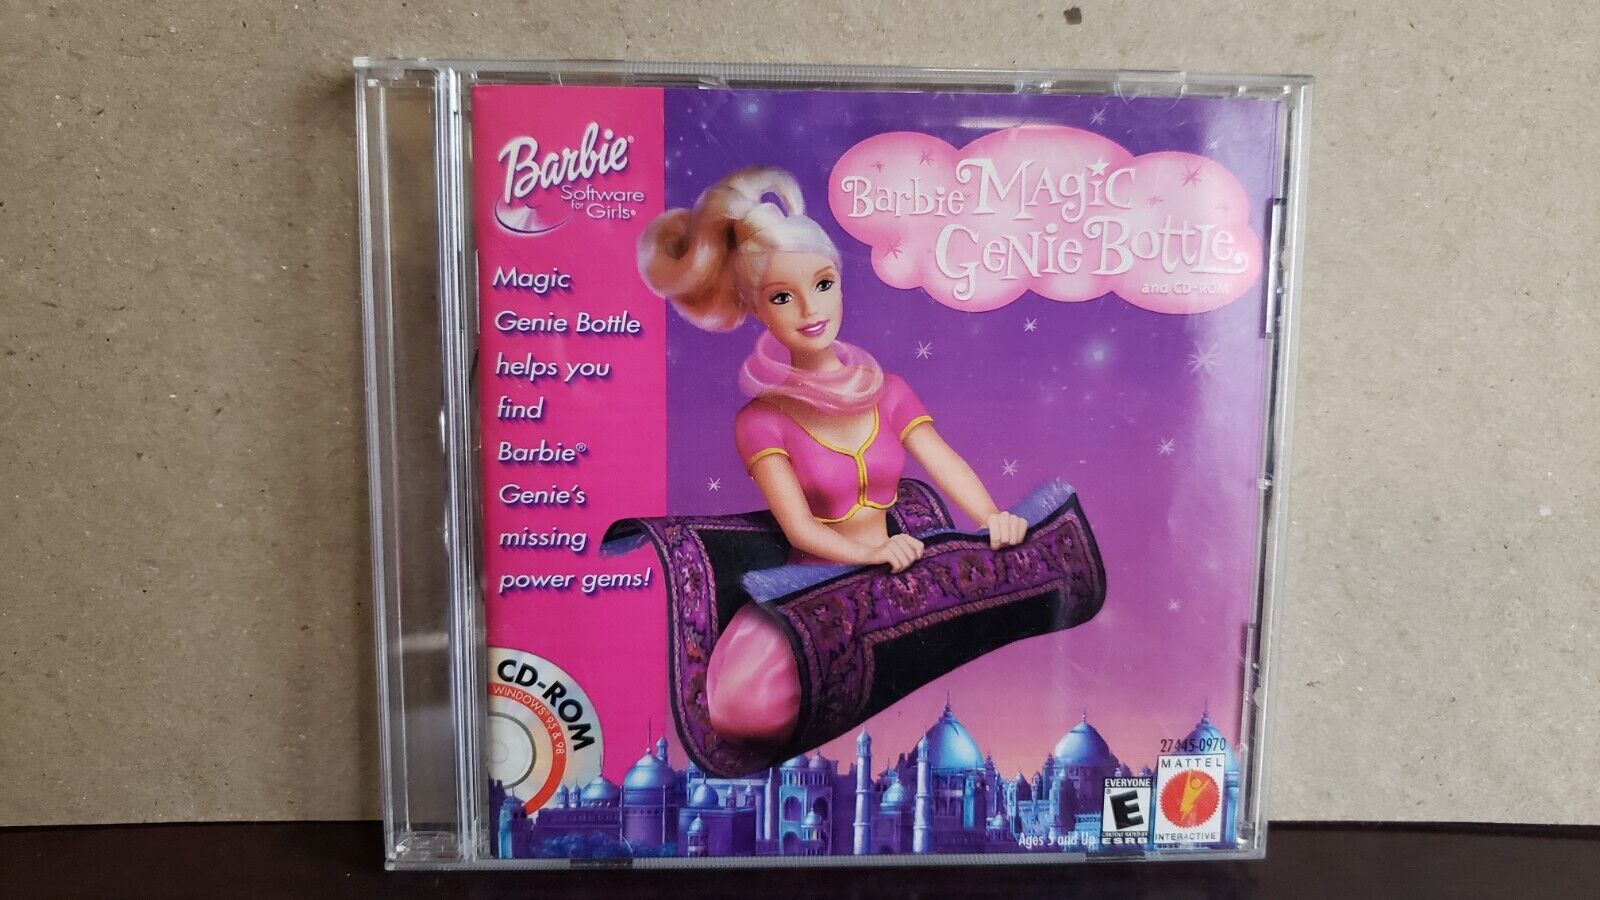 Barbie Magic Genie Bottle CD-ROM PC CD find missing power gems adventure game